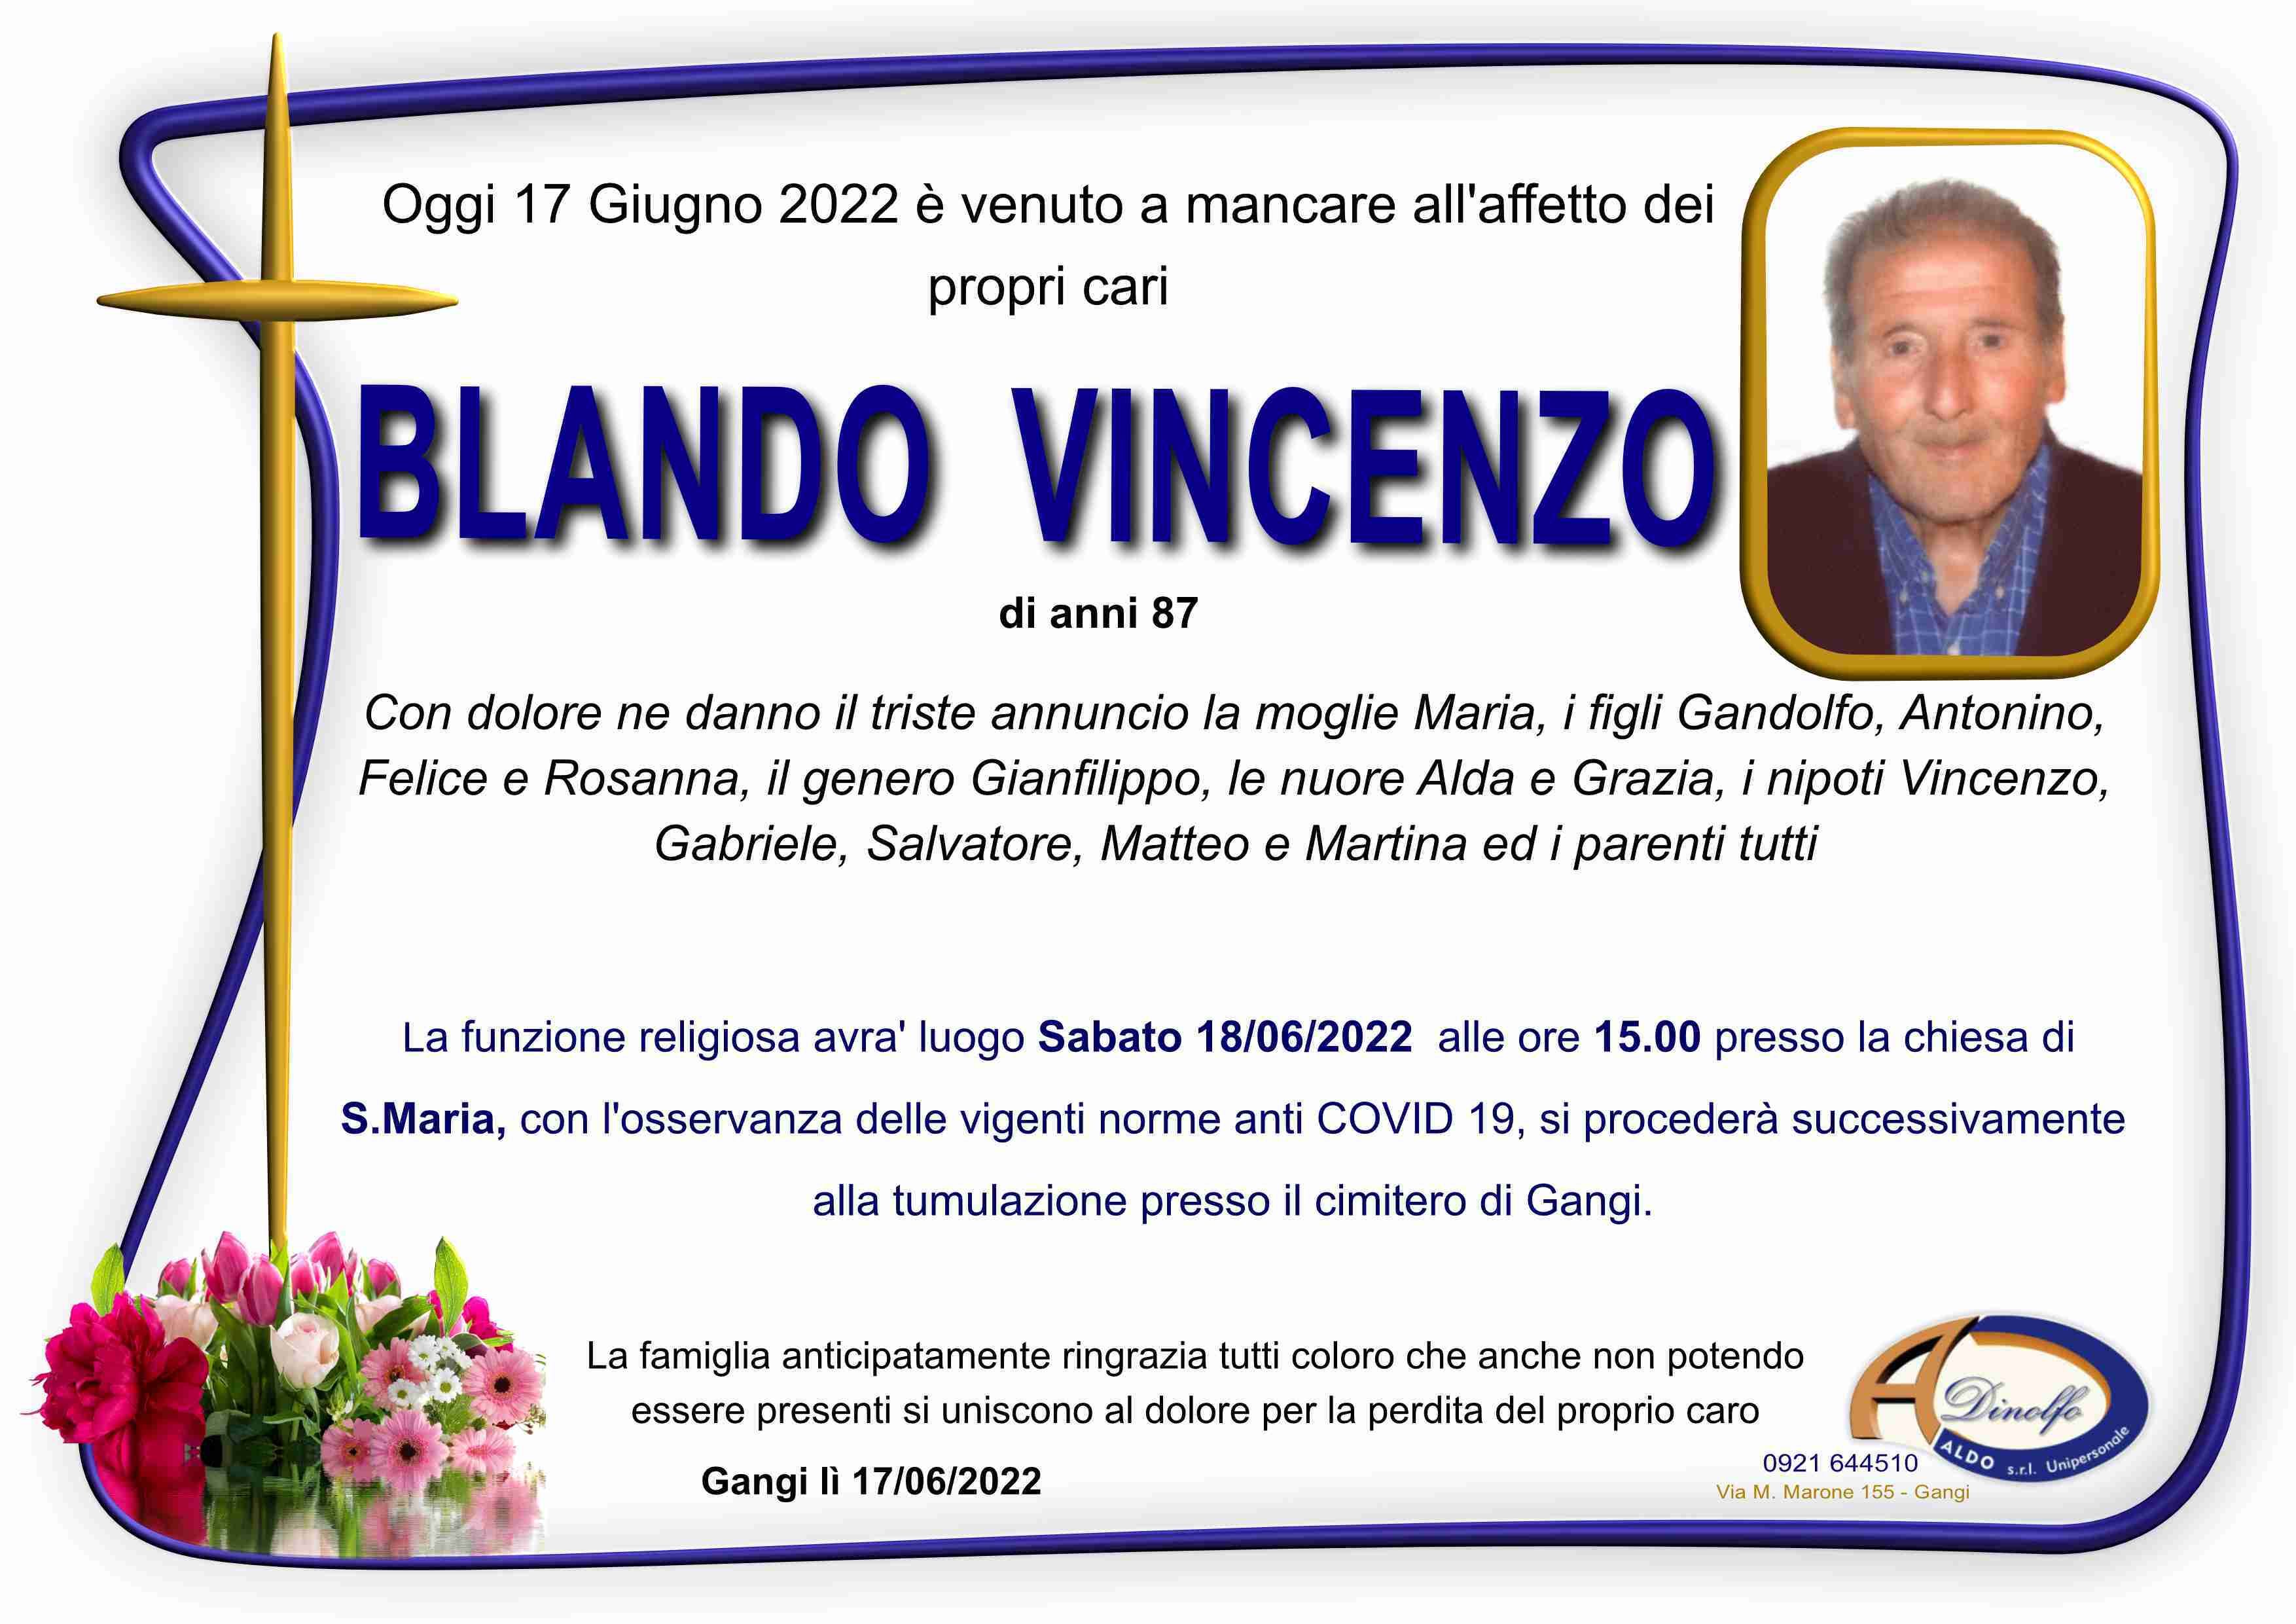 Vincenzo Blando